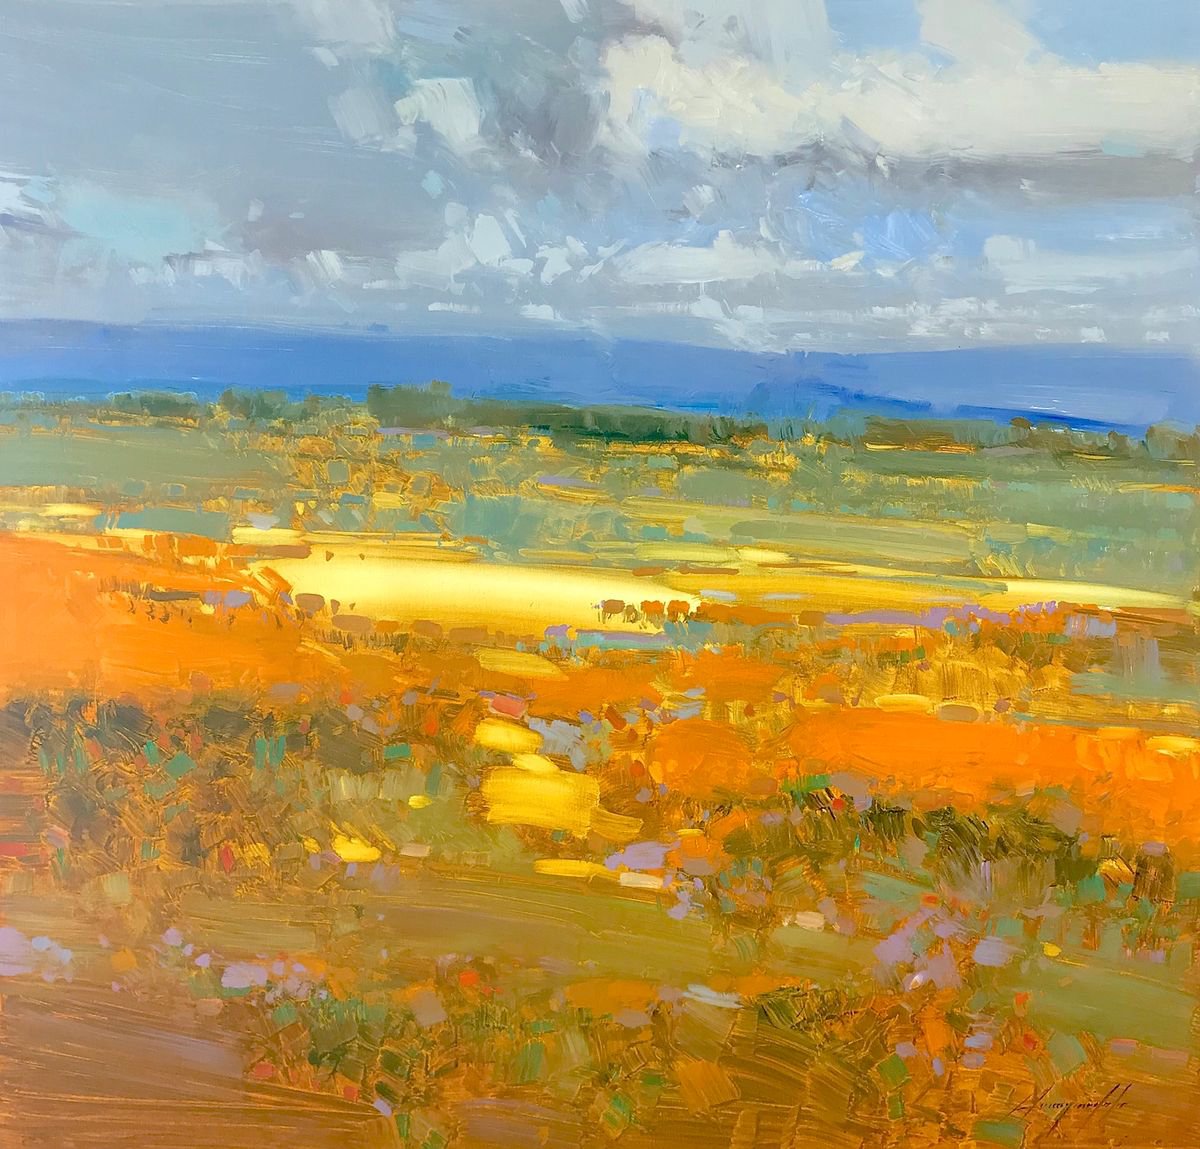 Field of Yellow Flowers, Original oil painting, Artfinder